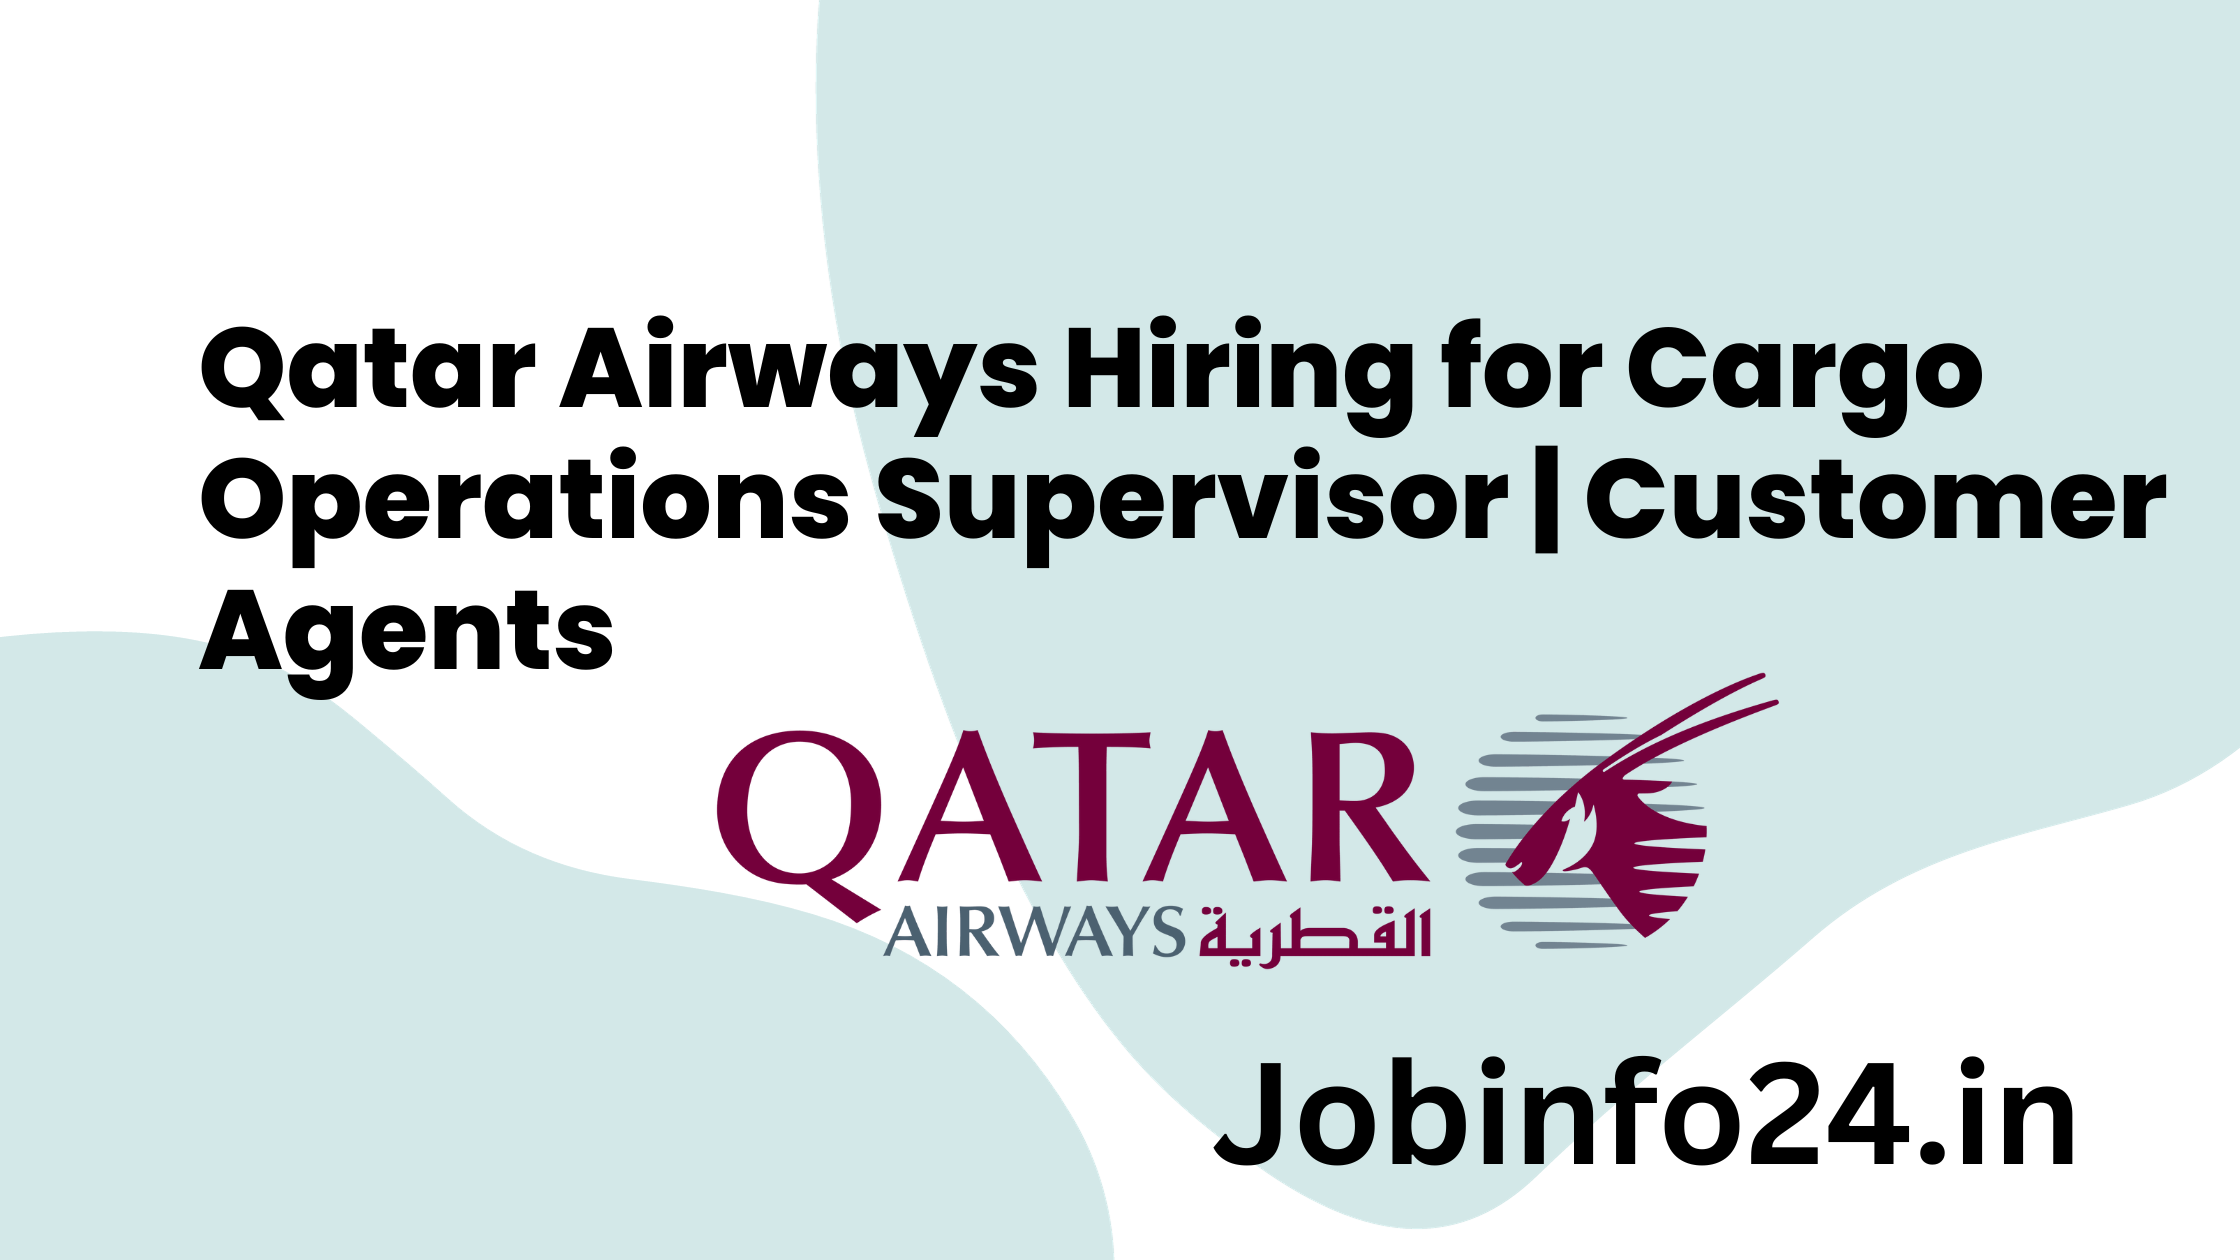 Qatar Airways Hiring for Cargo Operations Supervisor | Customer Agents